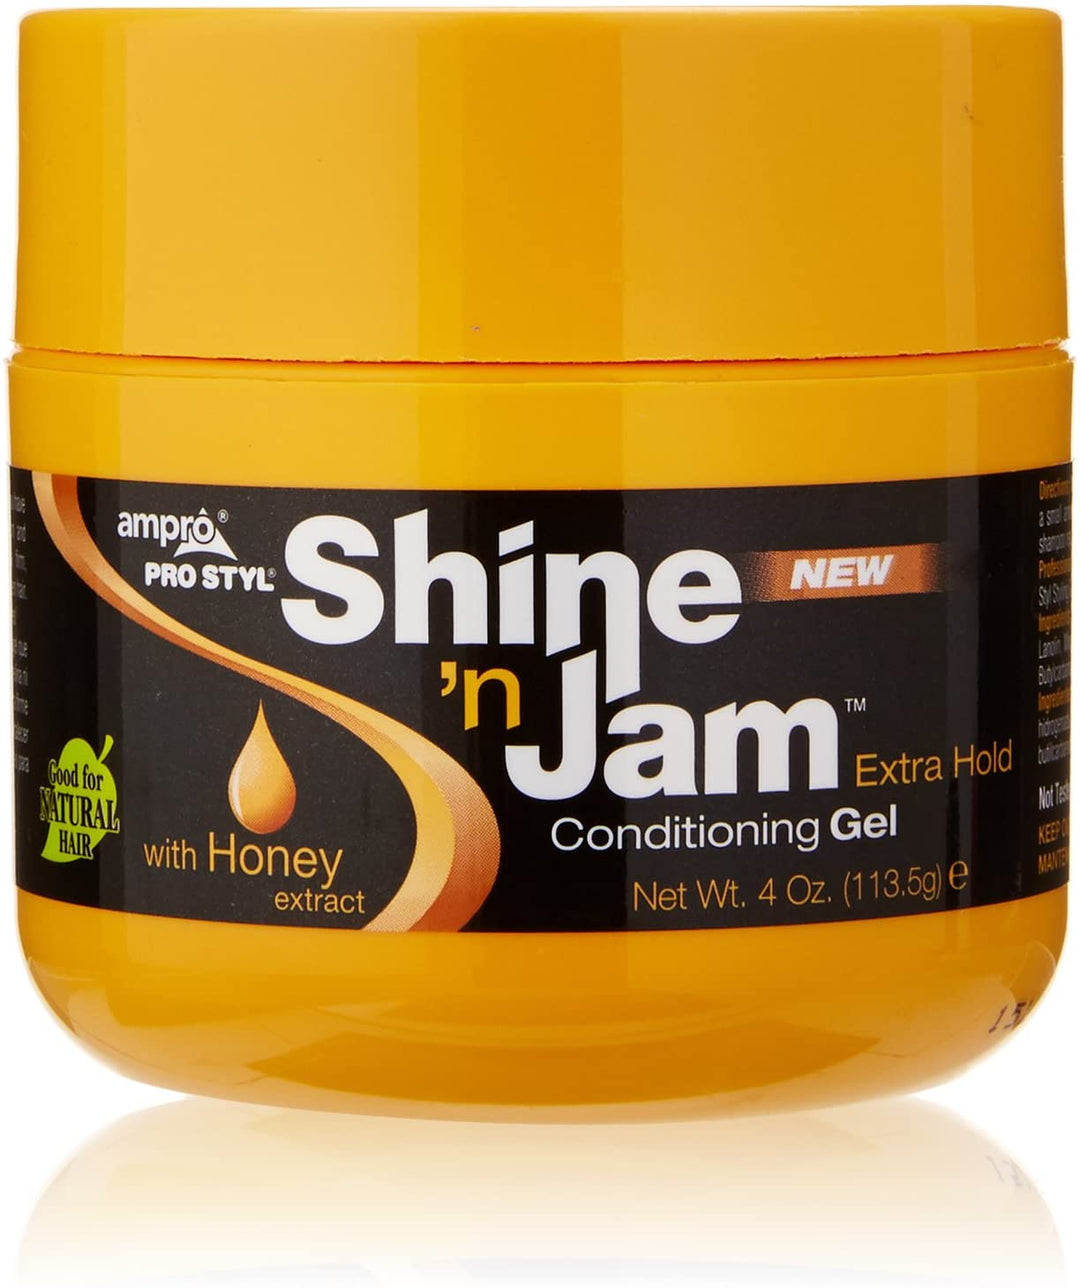 Shine’n Jam - Conditioning Gel